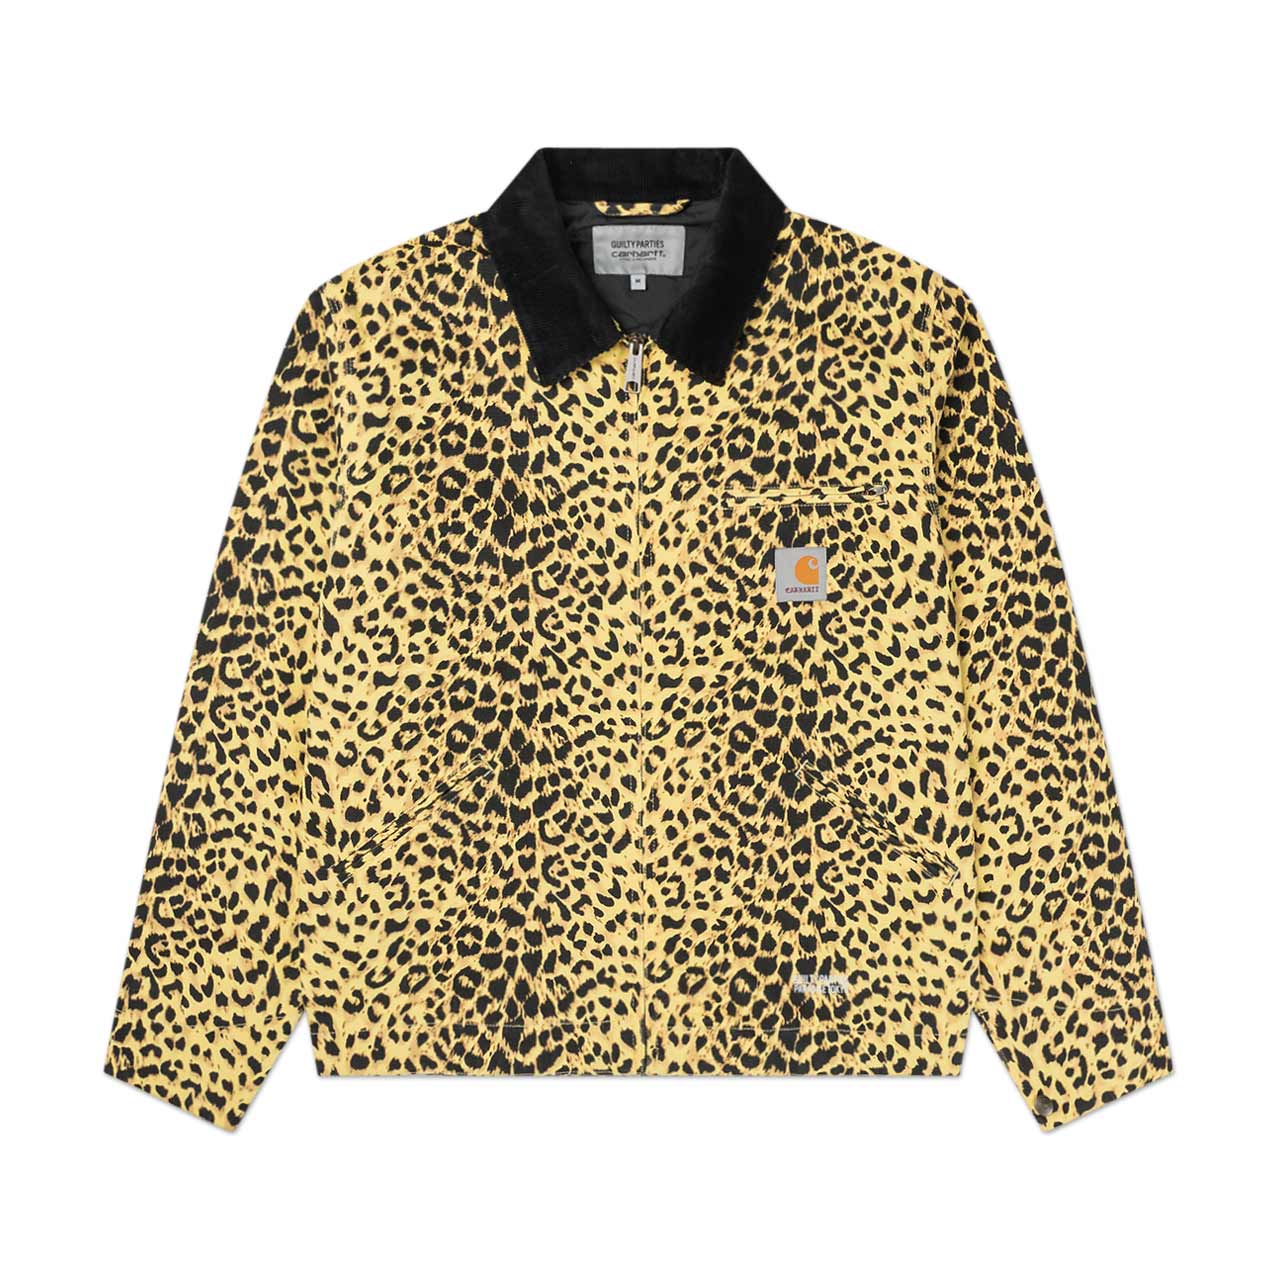 carhartt wip x wacko maria og detroit jacket (leopard print) - i028223.0e1.02.03 - a.plus - Image - 1